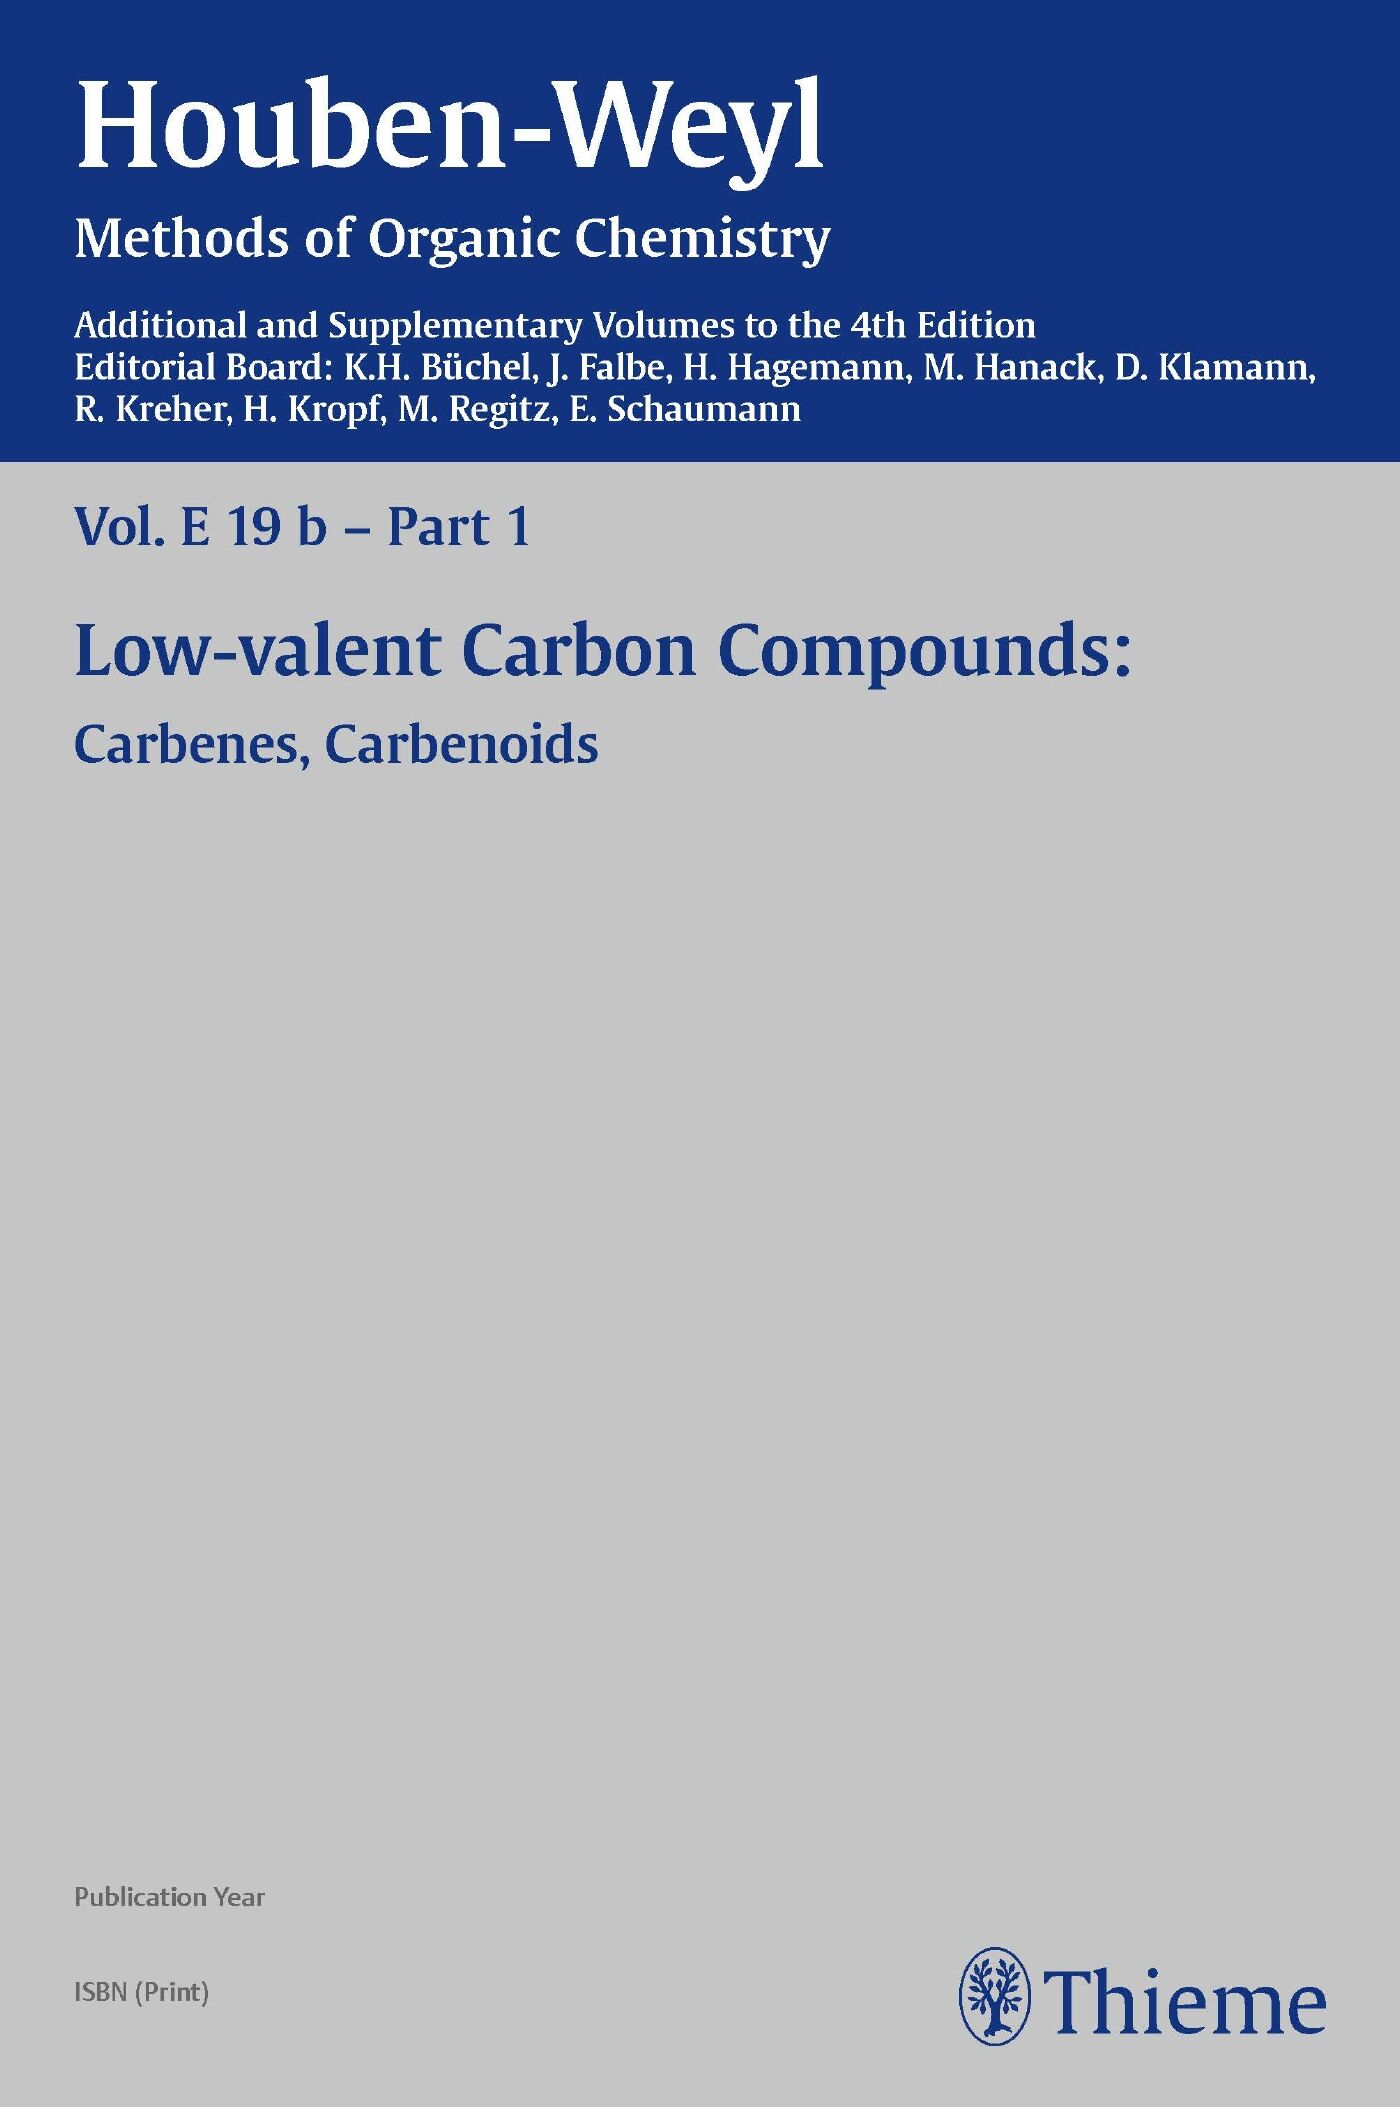 Houben-Weyl Methods of Organic Chemistry Vol. E 19b, 4th Edition Supplement, 9783131820242